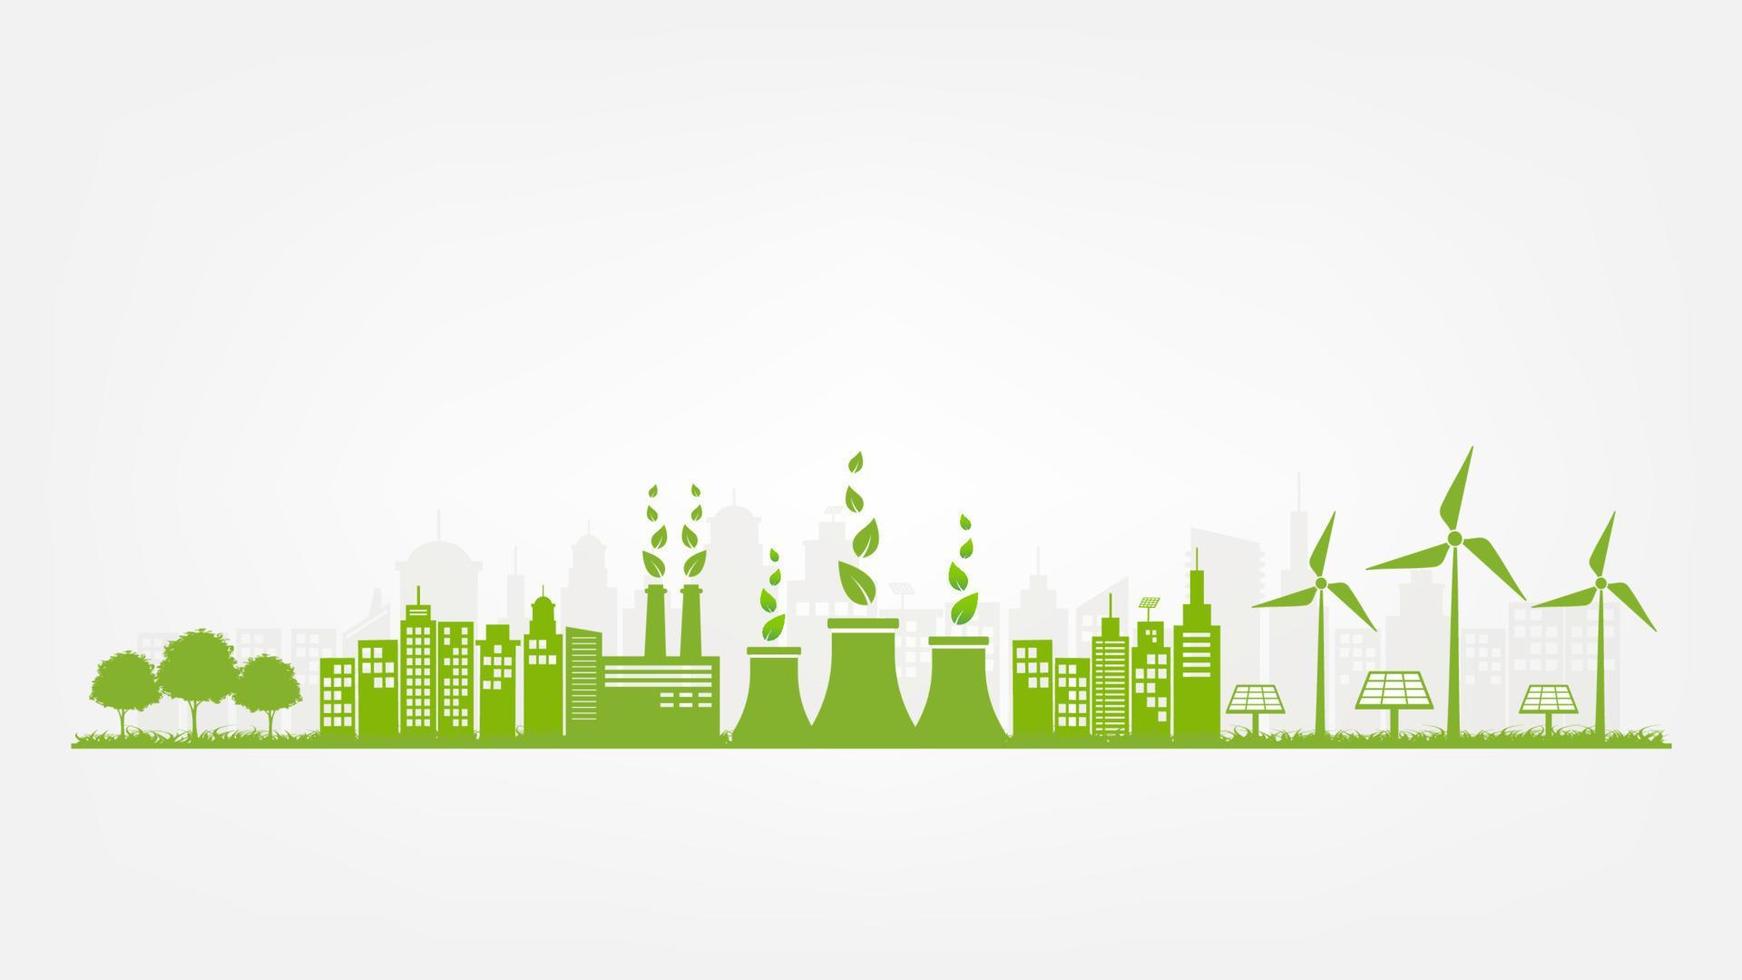 elementos de design plano de banner para desenvolvimento de energia sustentável, conceito ambiental e ecologia vetor